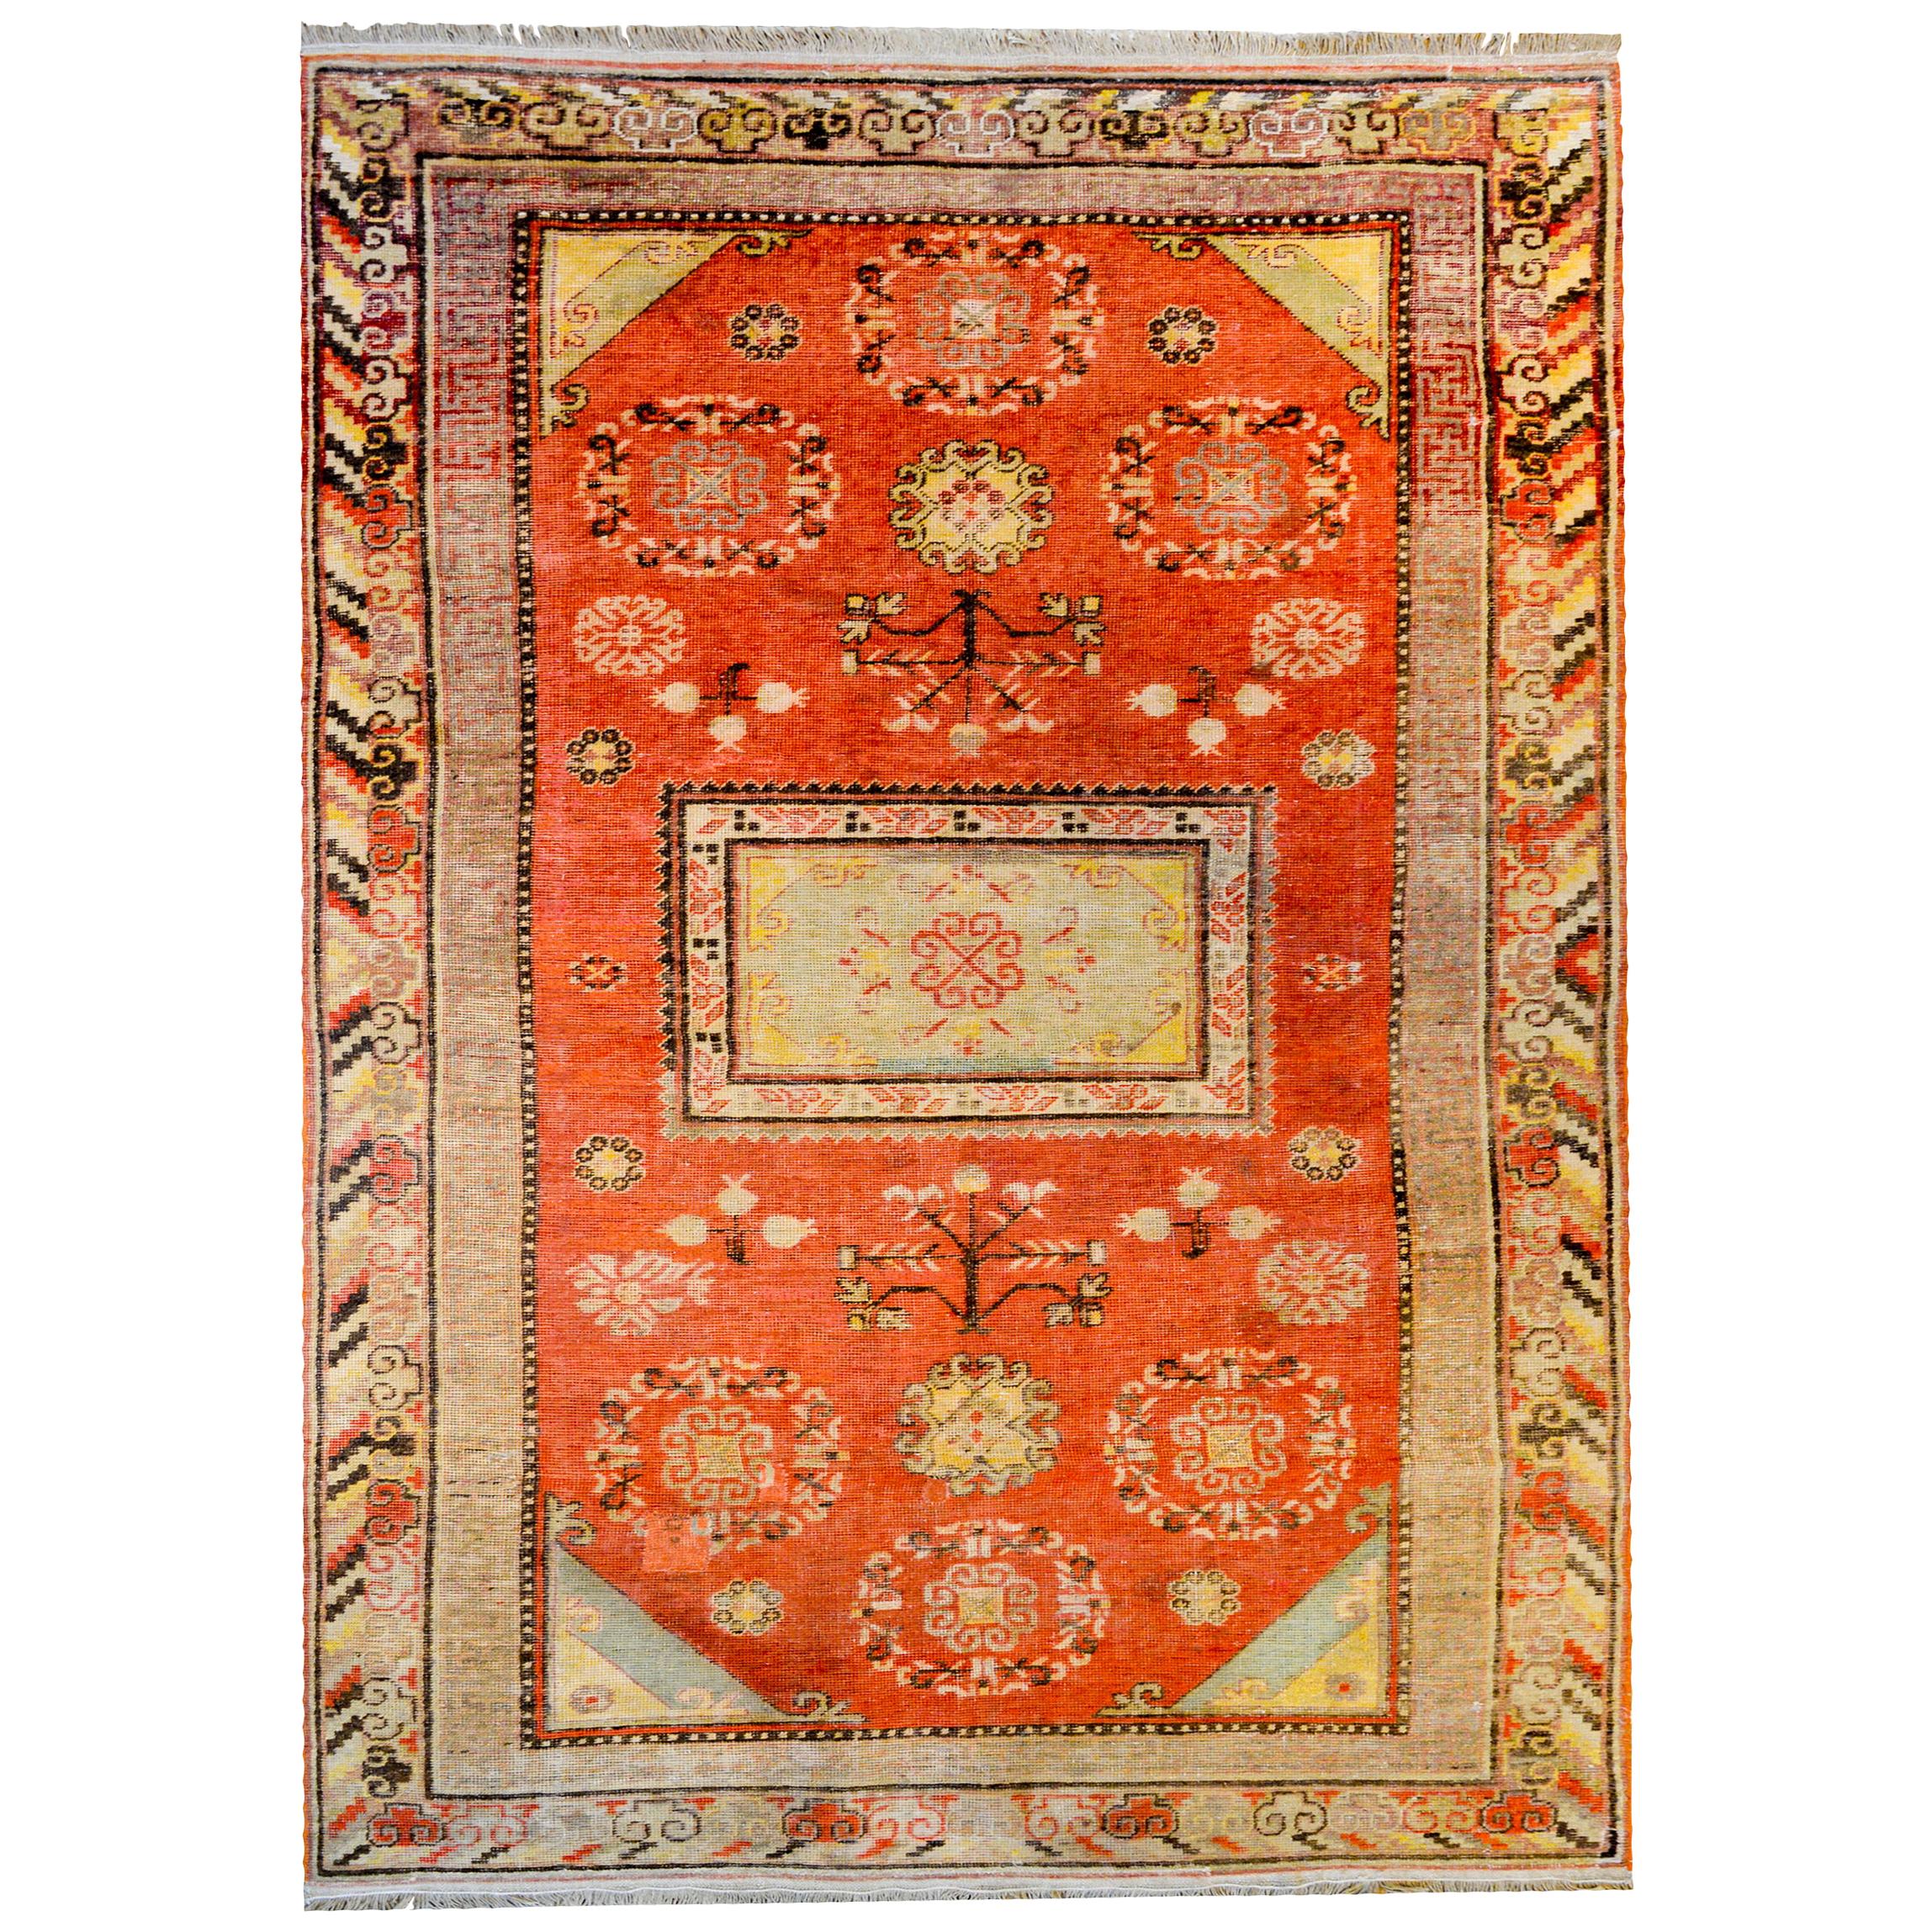 Beautiful Early 20th Century Central Asian Khotan Rug